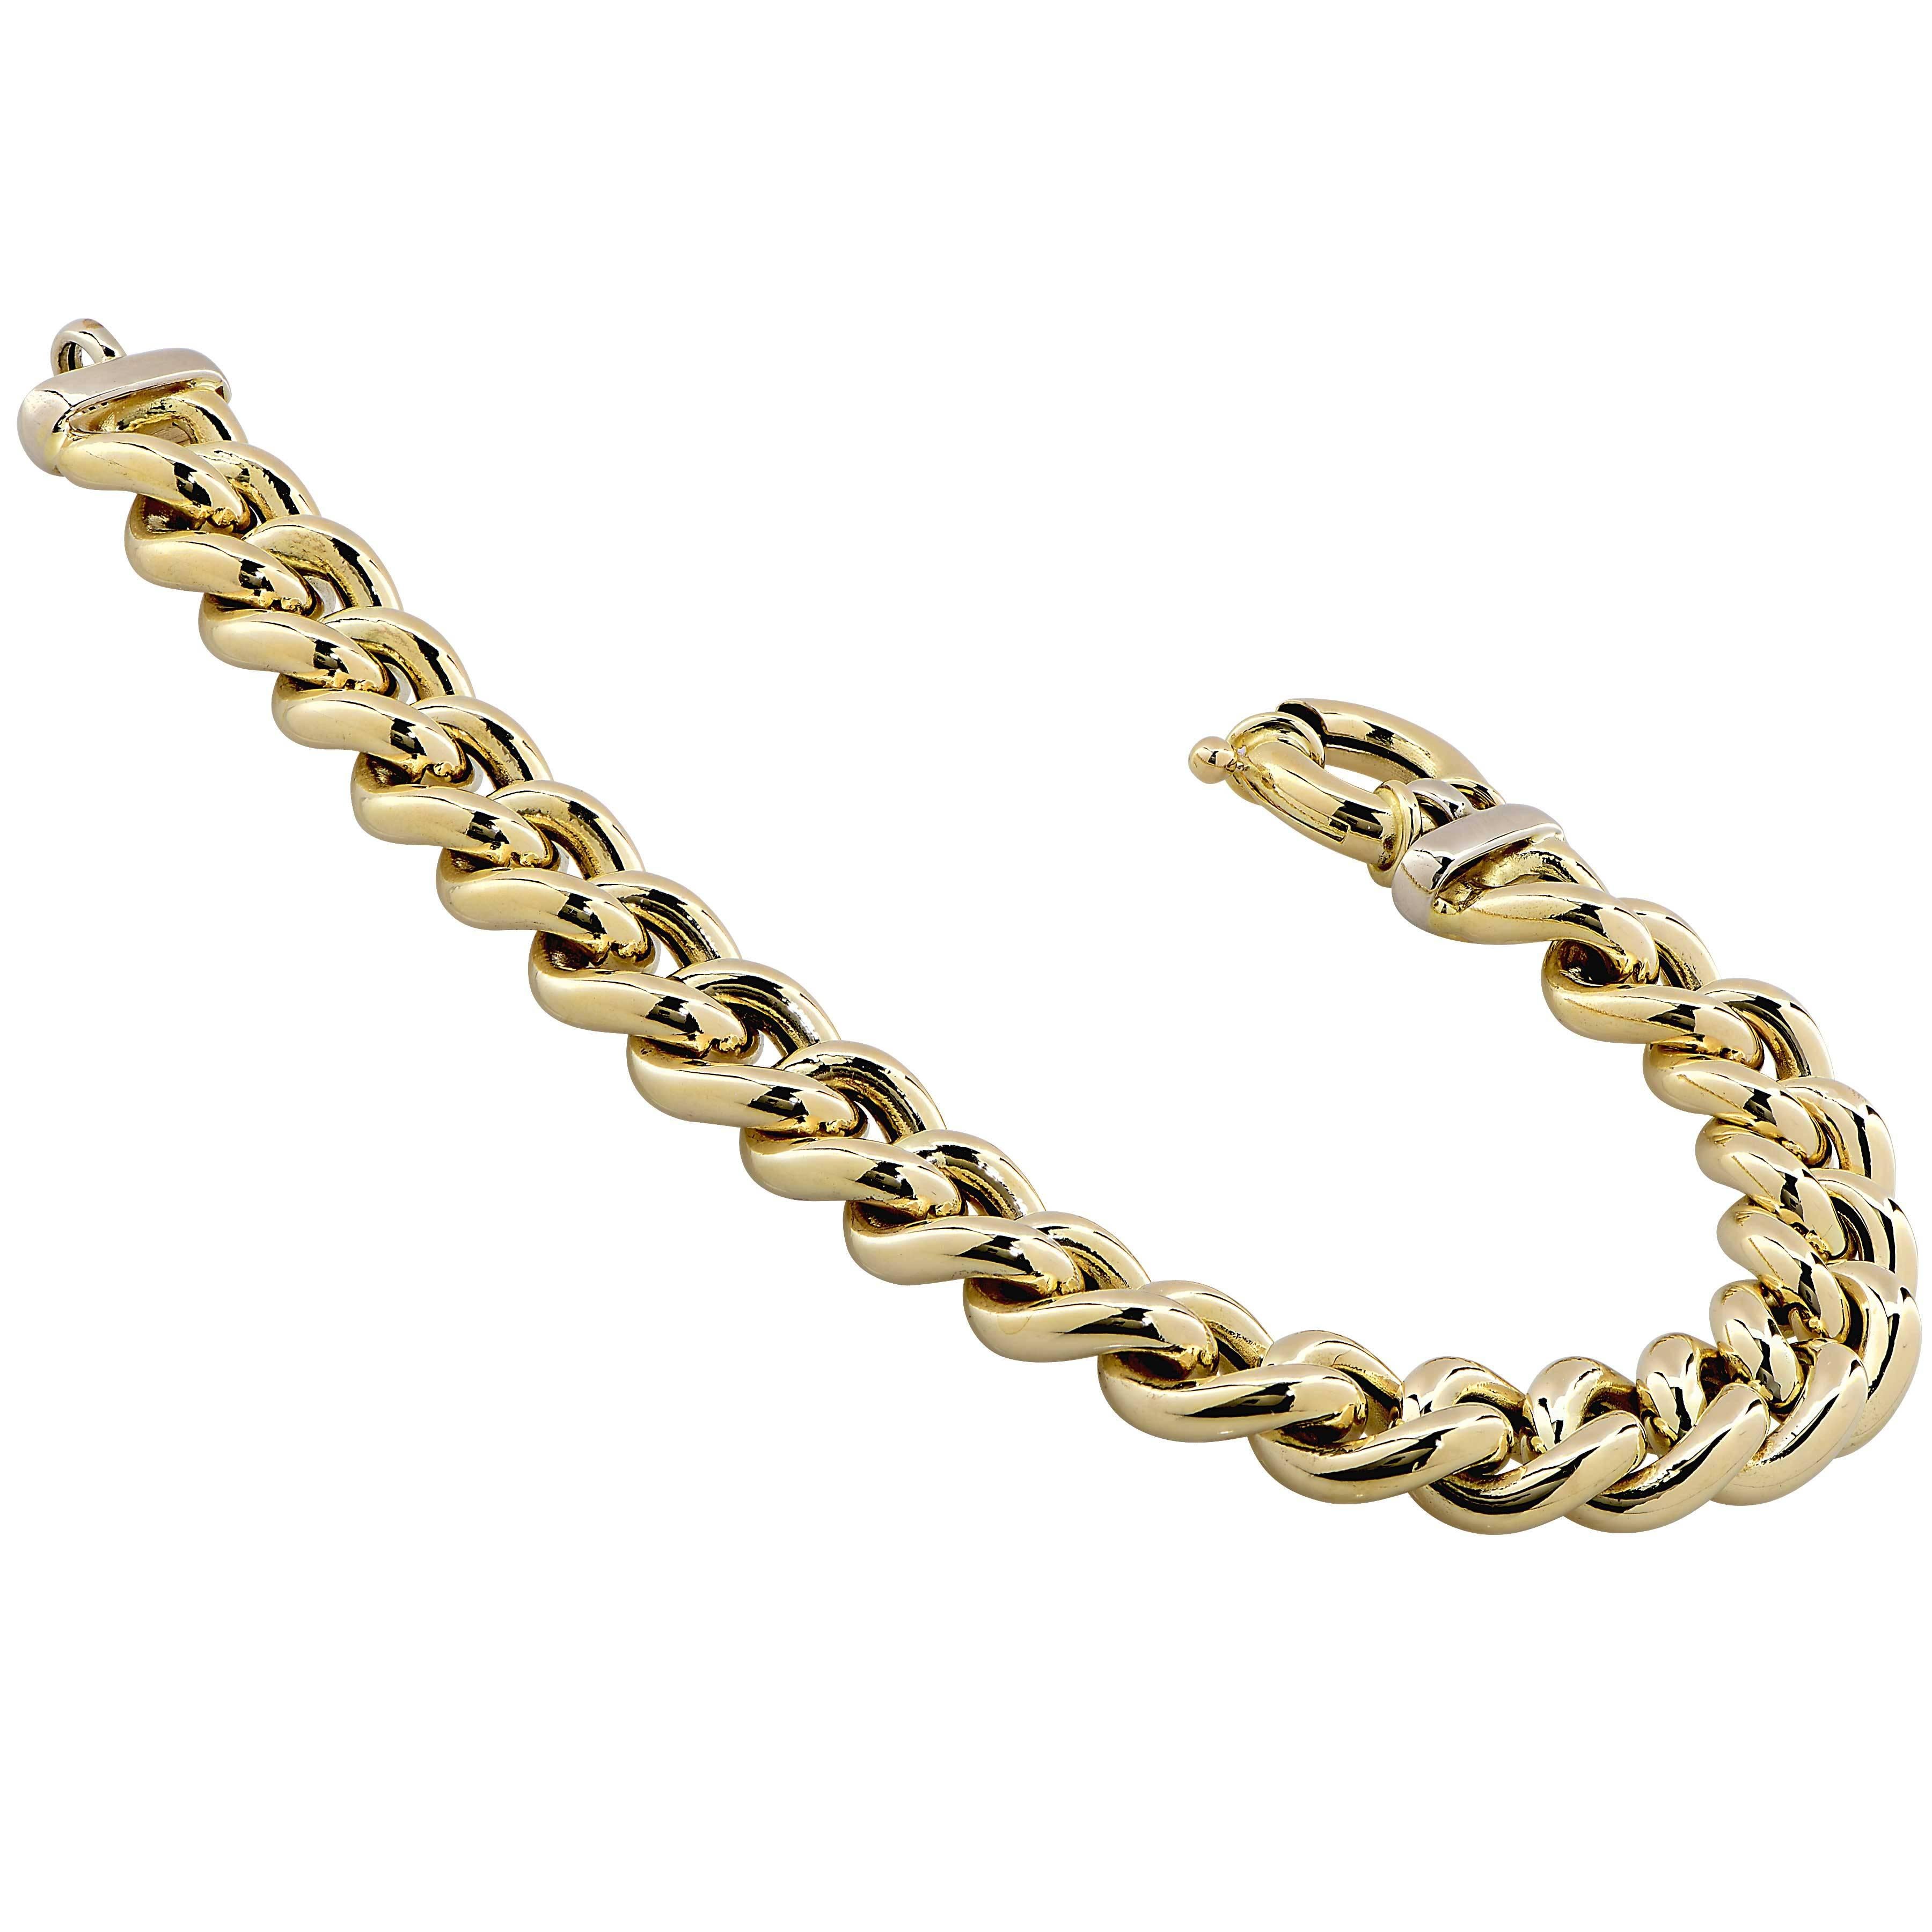 18 Karat Yellow Gold Italian Hollow Link Bracelet
Bracelet Length: 8 Inches
Metal Type: 18 Karat Yellow Gold
Metal Weight: 27.2 Grams